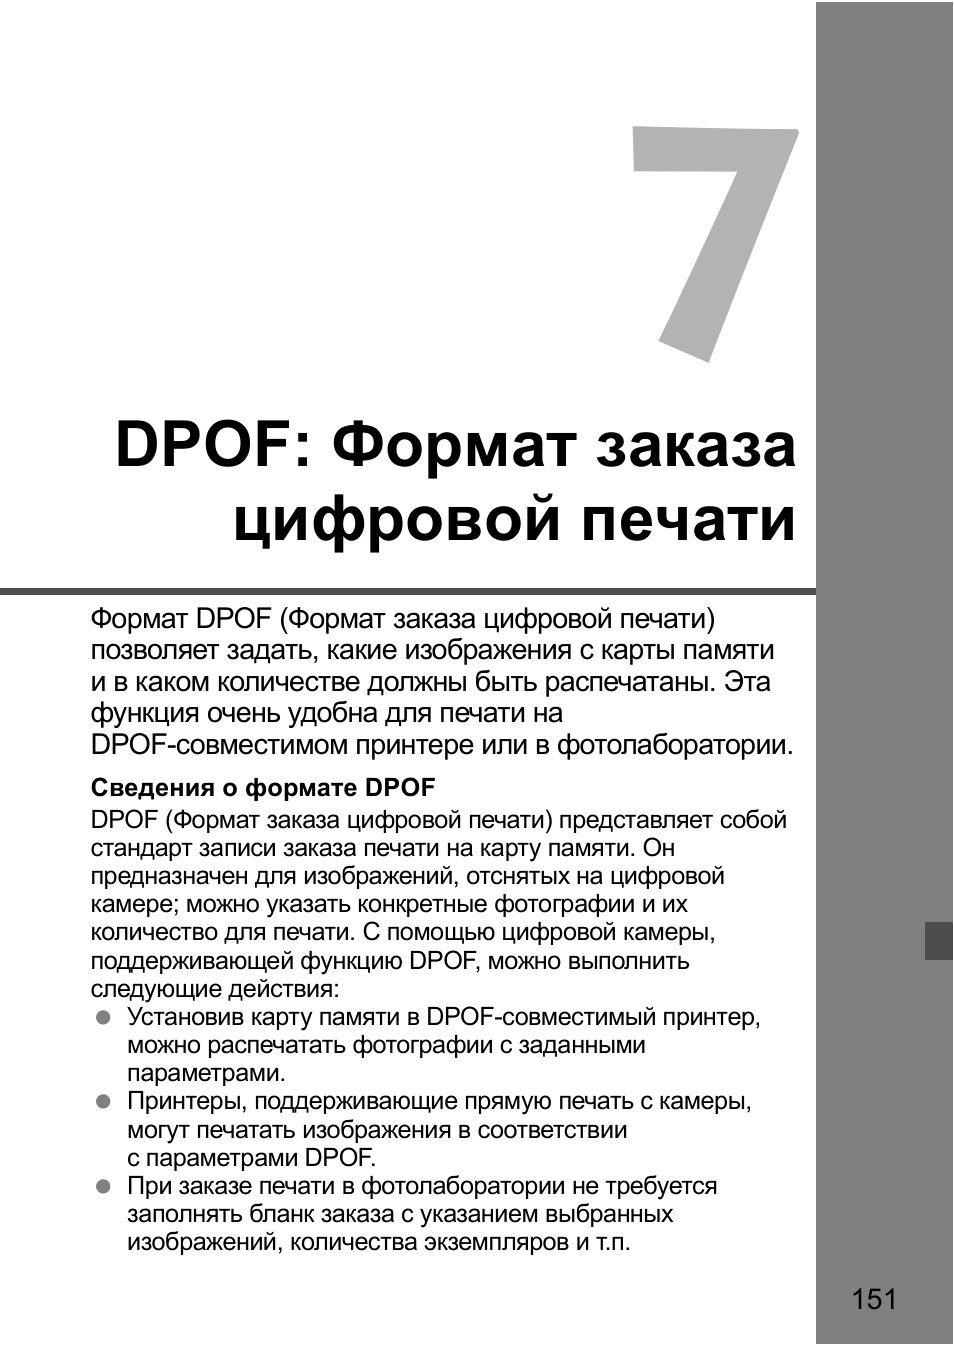 Dpof: формат заказа цифровой печати 151, Dpof: формат заказа цифровой печати | Инструкция по эксплуатации Canon EOS 1D Mark II N | Страница 151 / 196